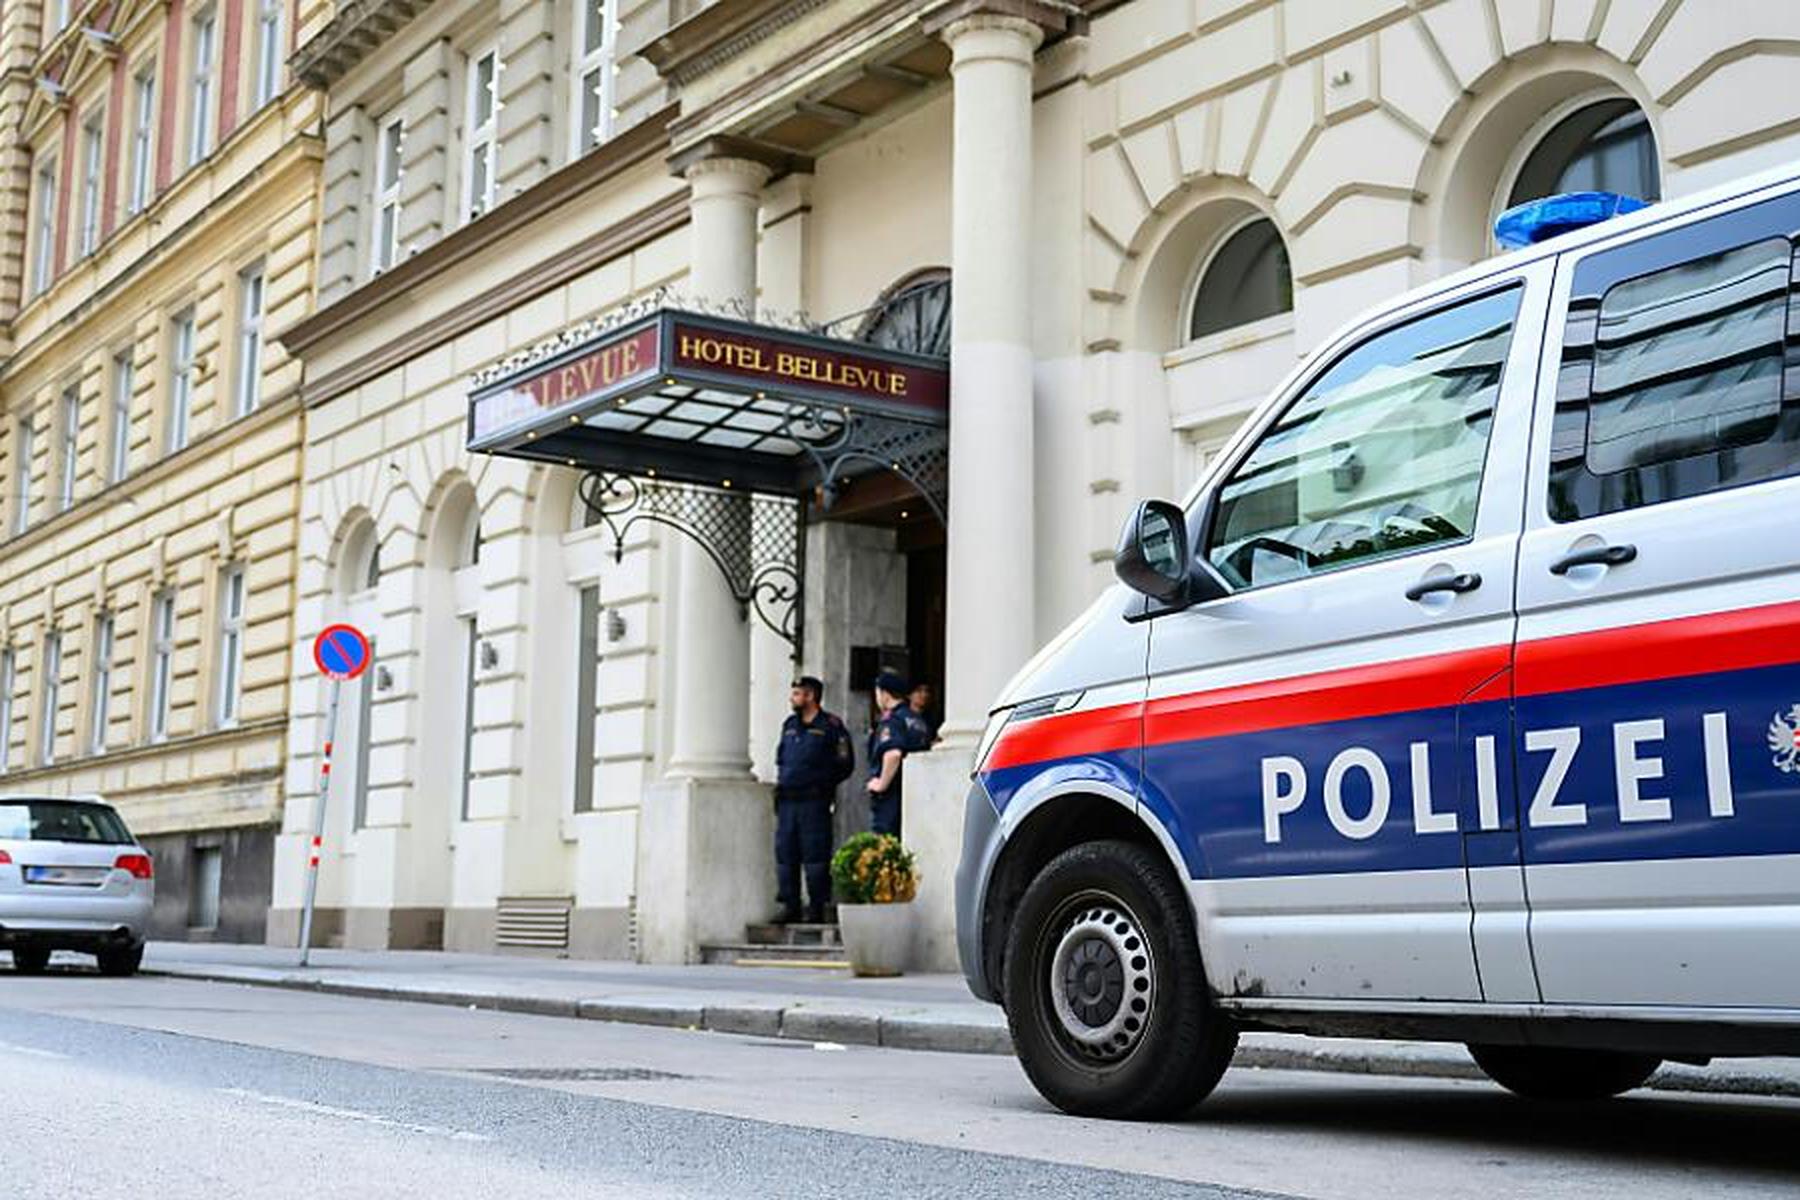 Wien: Bauarbeiter in Wiener Hotel getötet